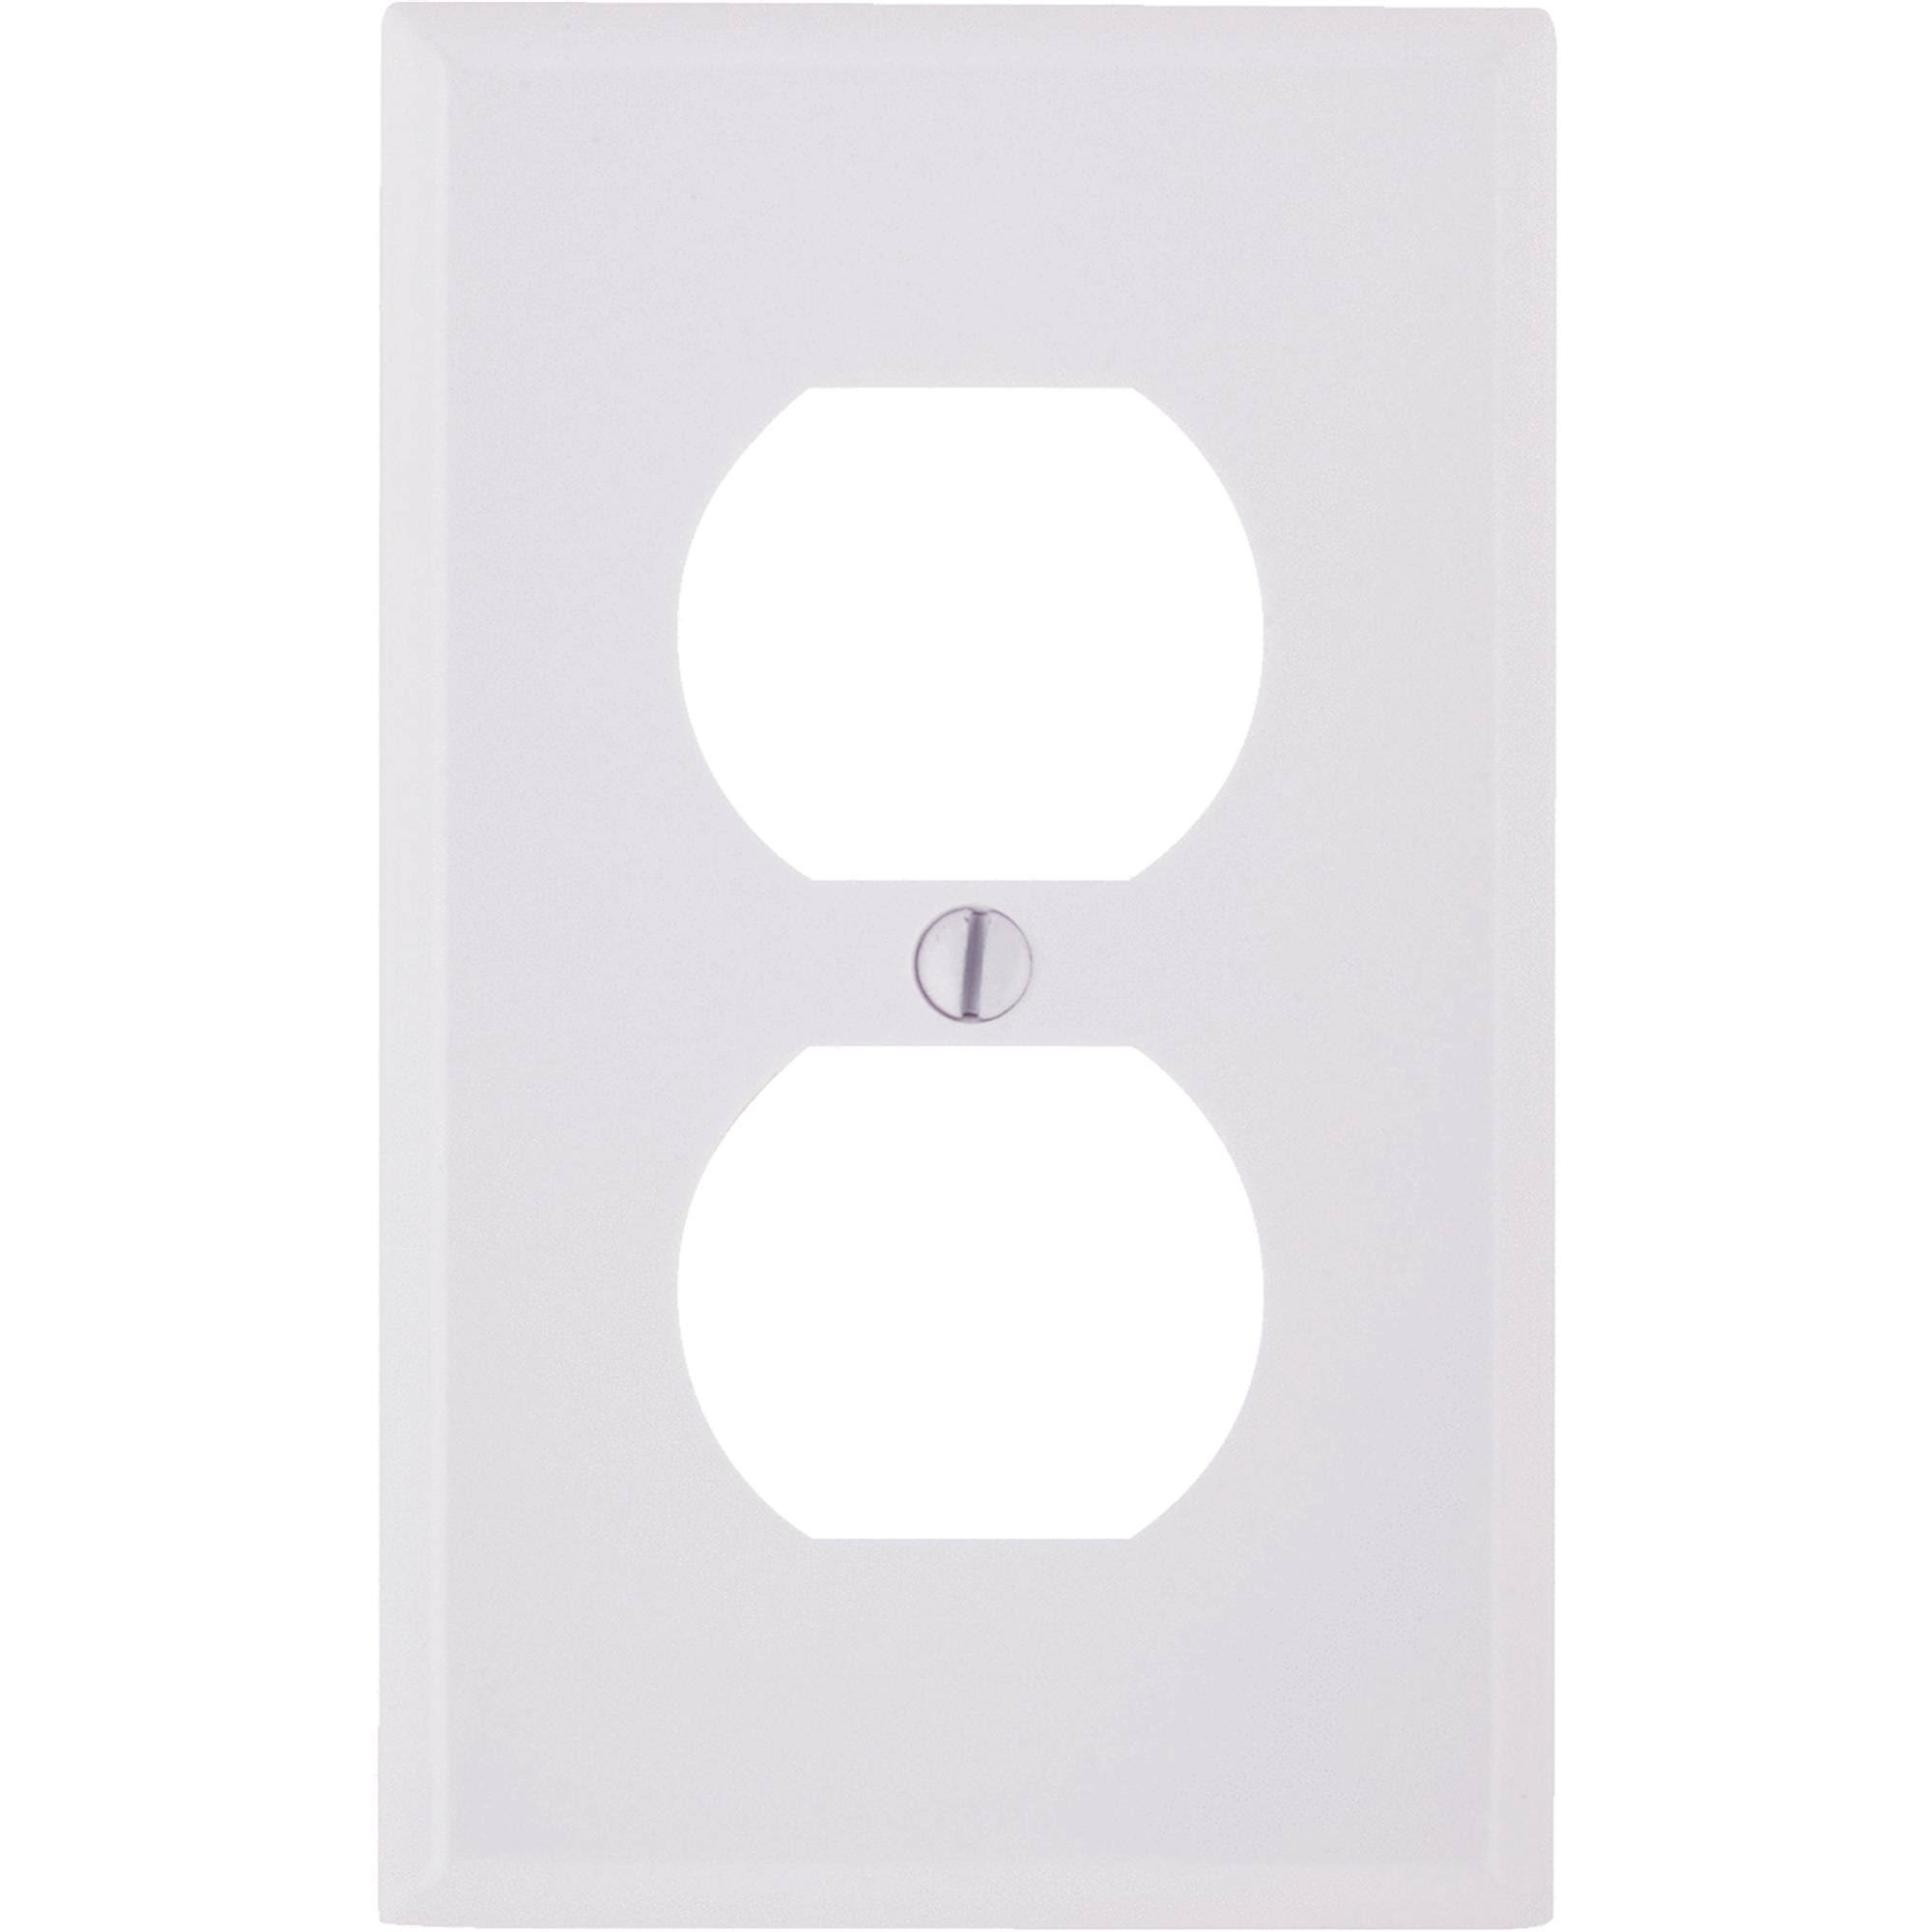 Leviton Single Gang Duplex Receptacle Plate - White, Standard Size